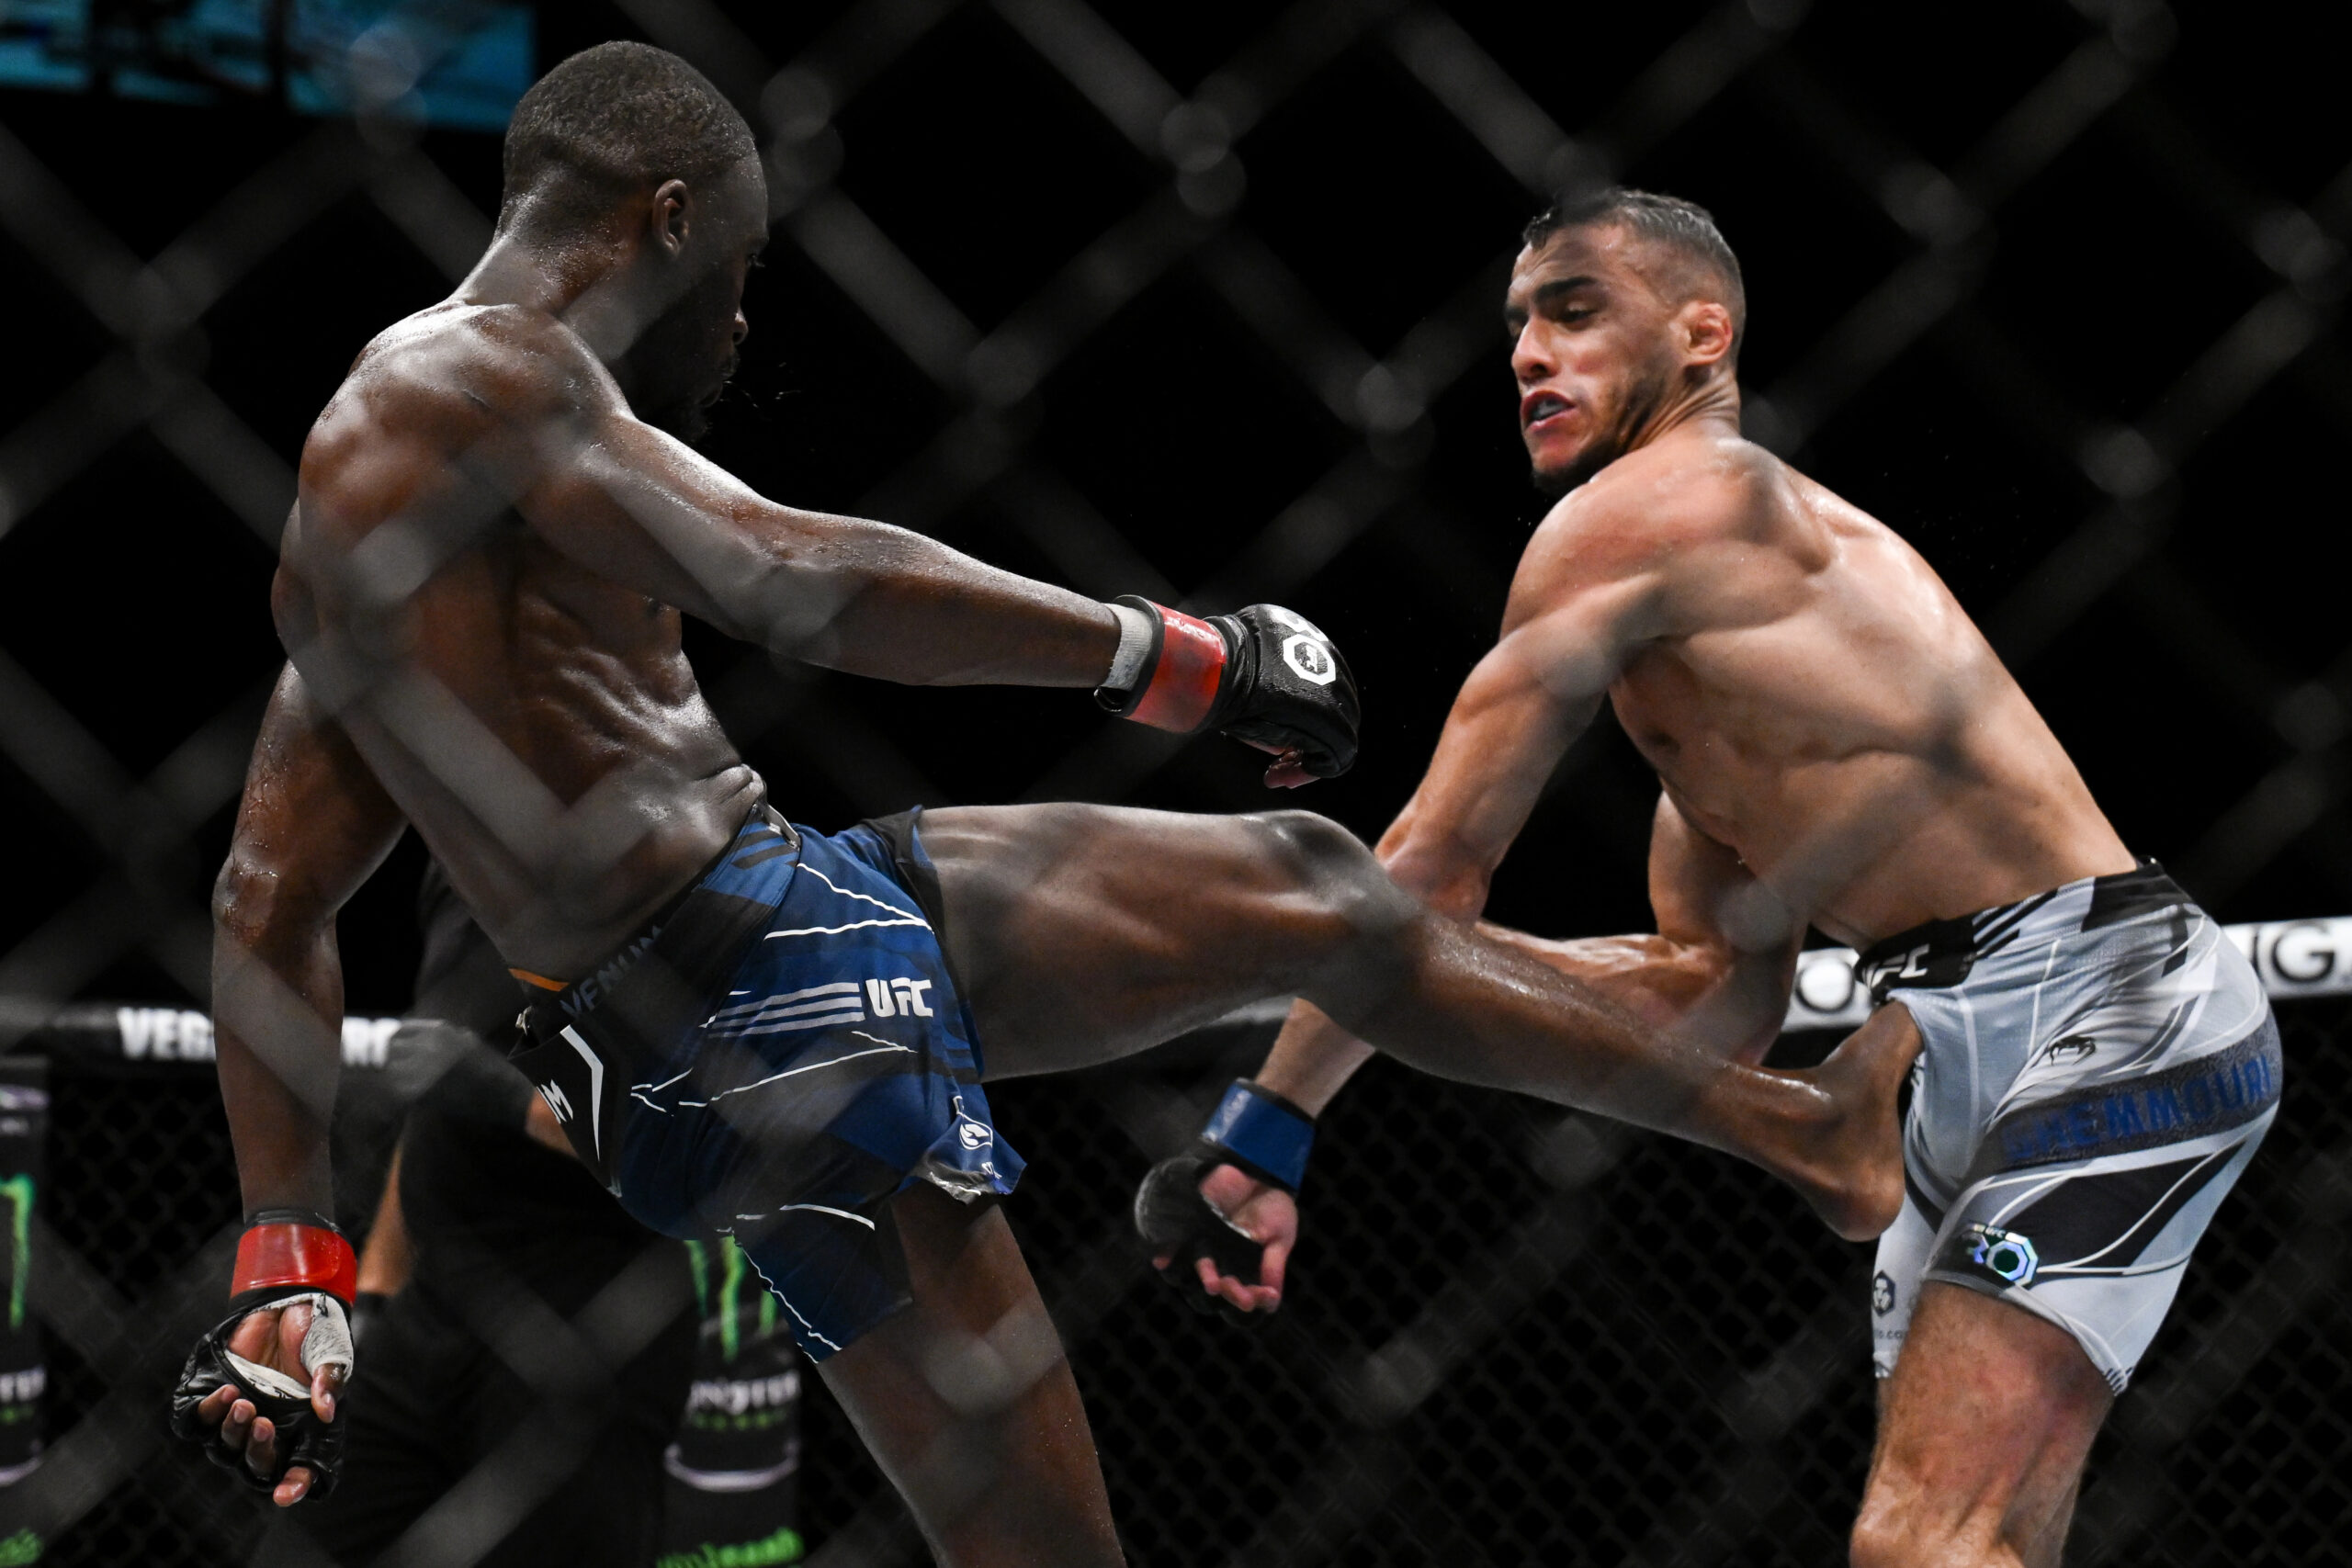 William Gomis def. Yanis Ghemmouri at UFC Fight Night 226: Best photos